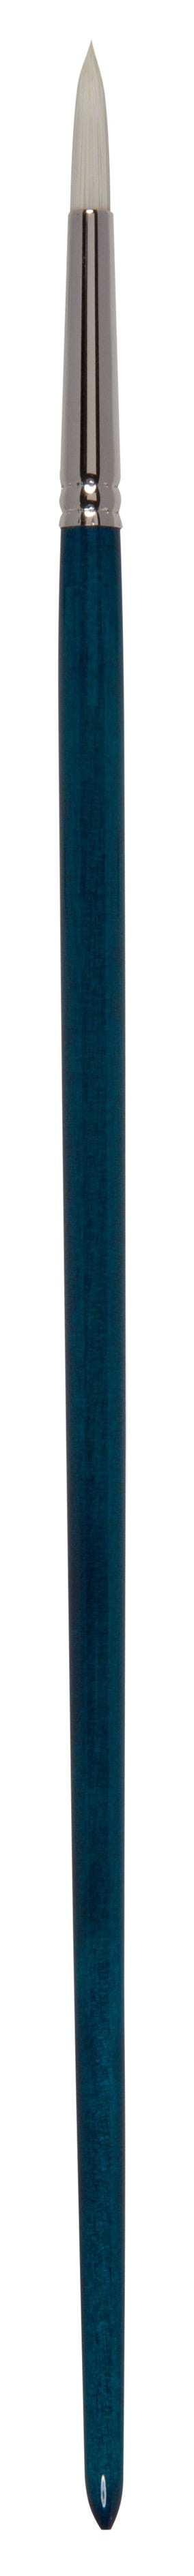 Zahn Acrylic Brush Round, Infinity, 9975 Size 4